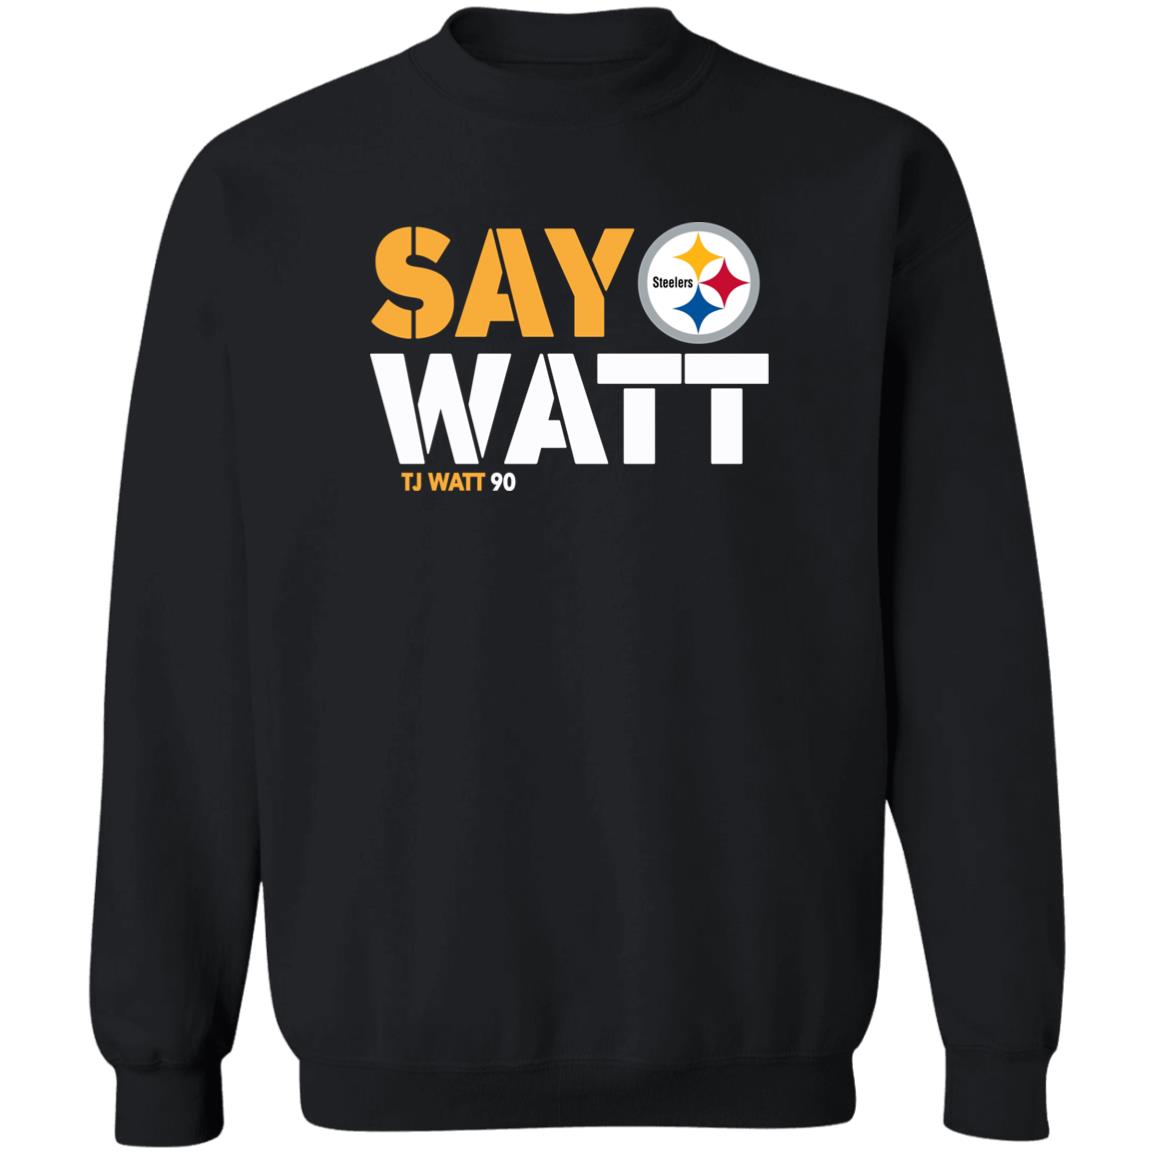 Pittsburgh Steelers Say Watt Tj Watt 90 Shirt 1